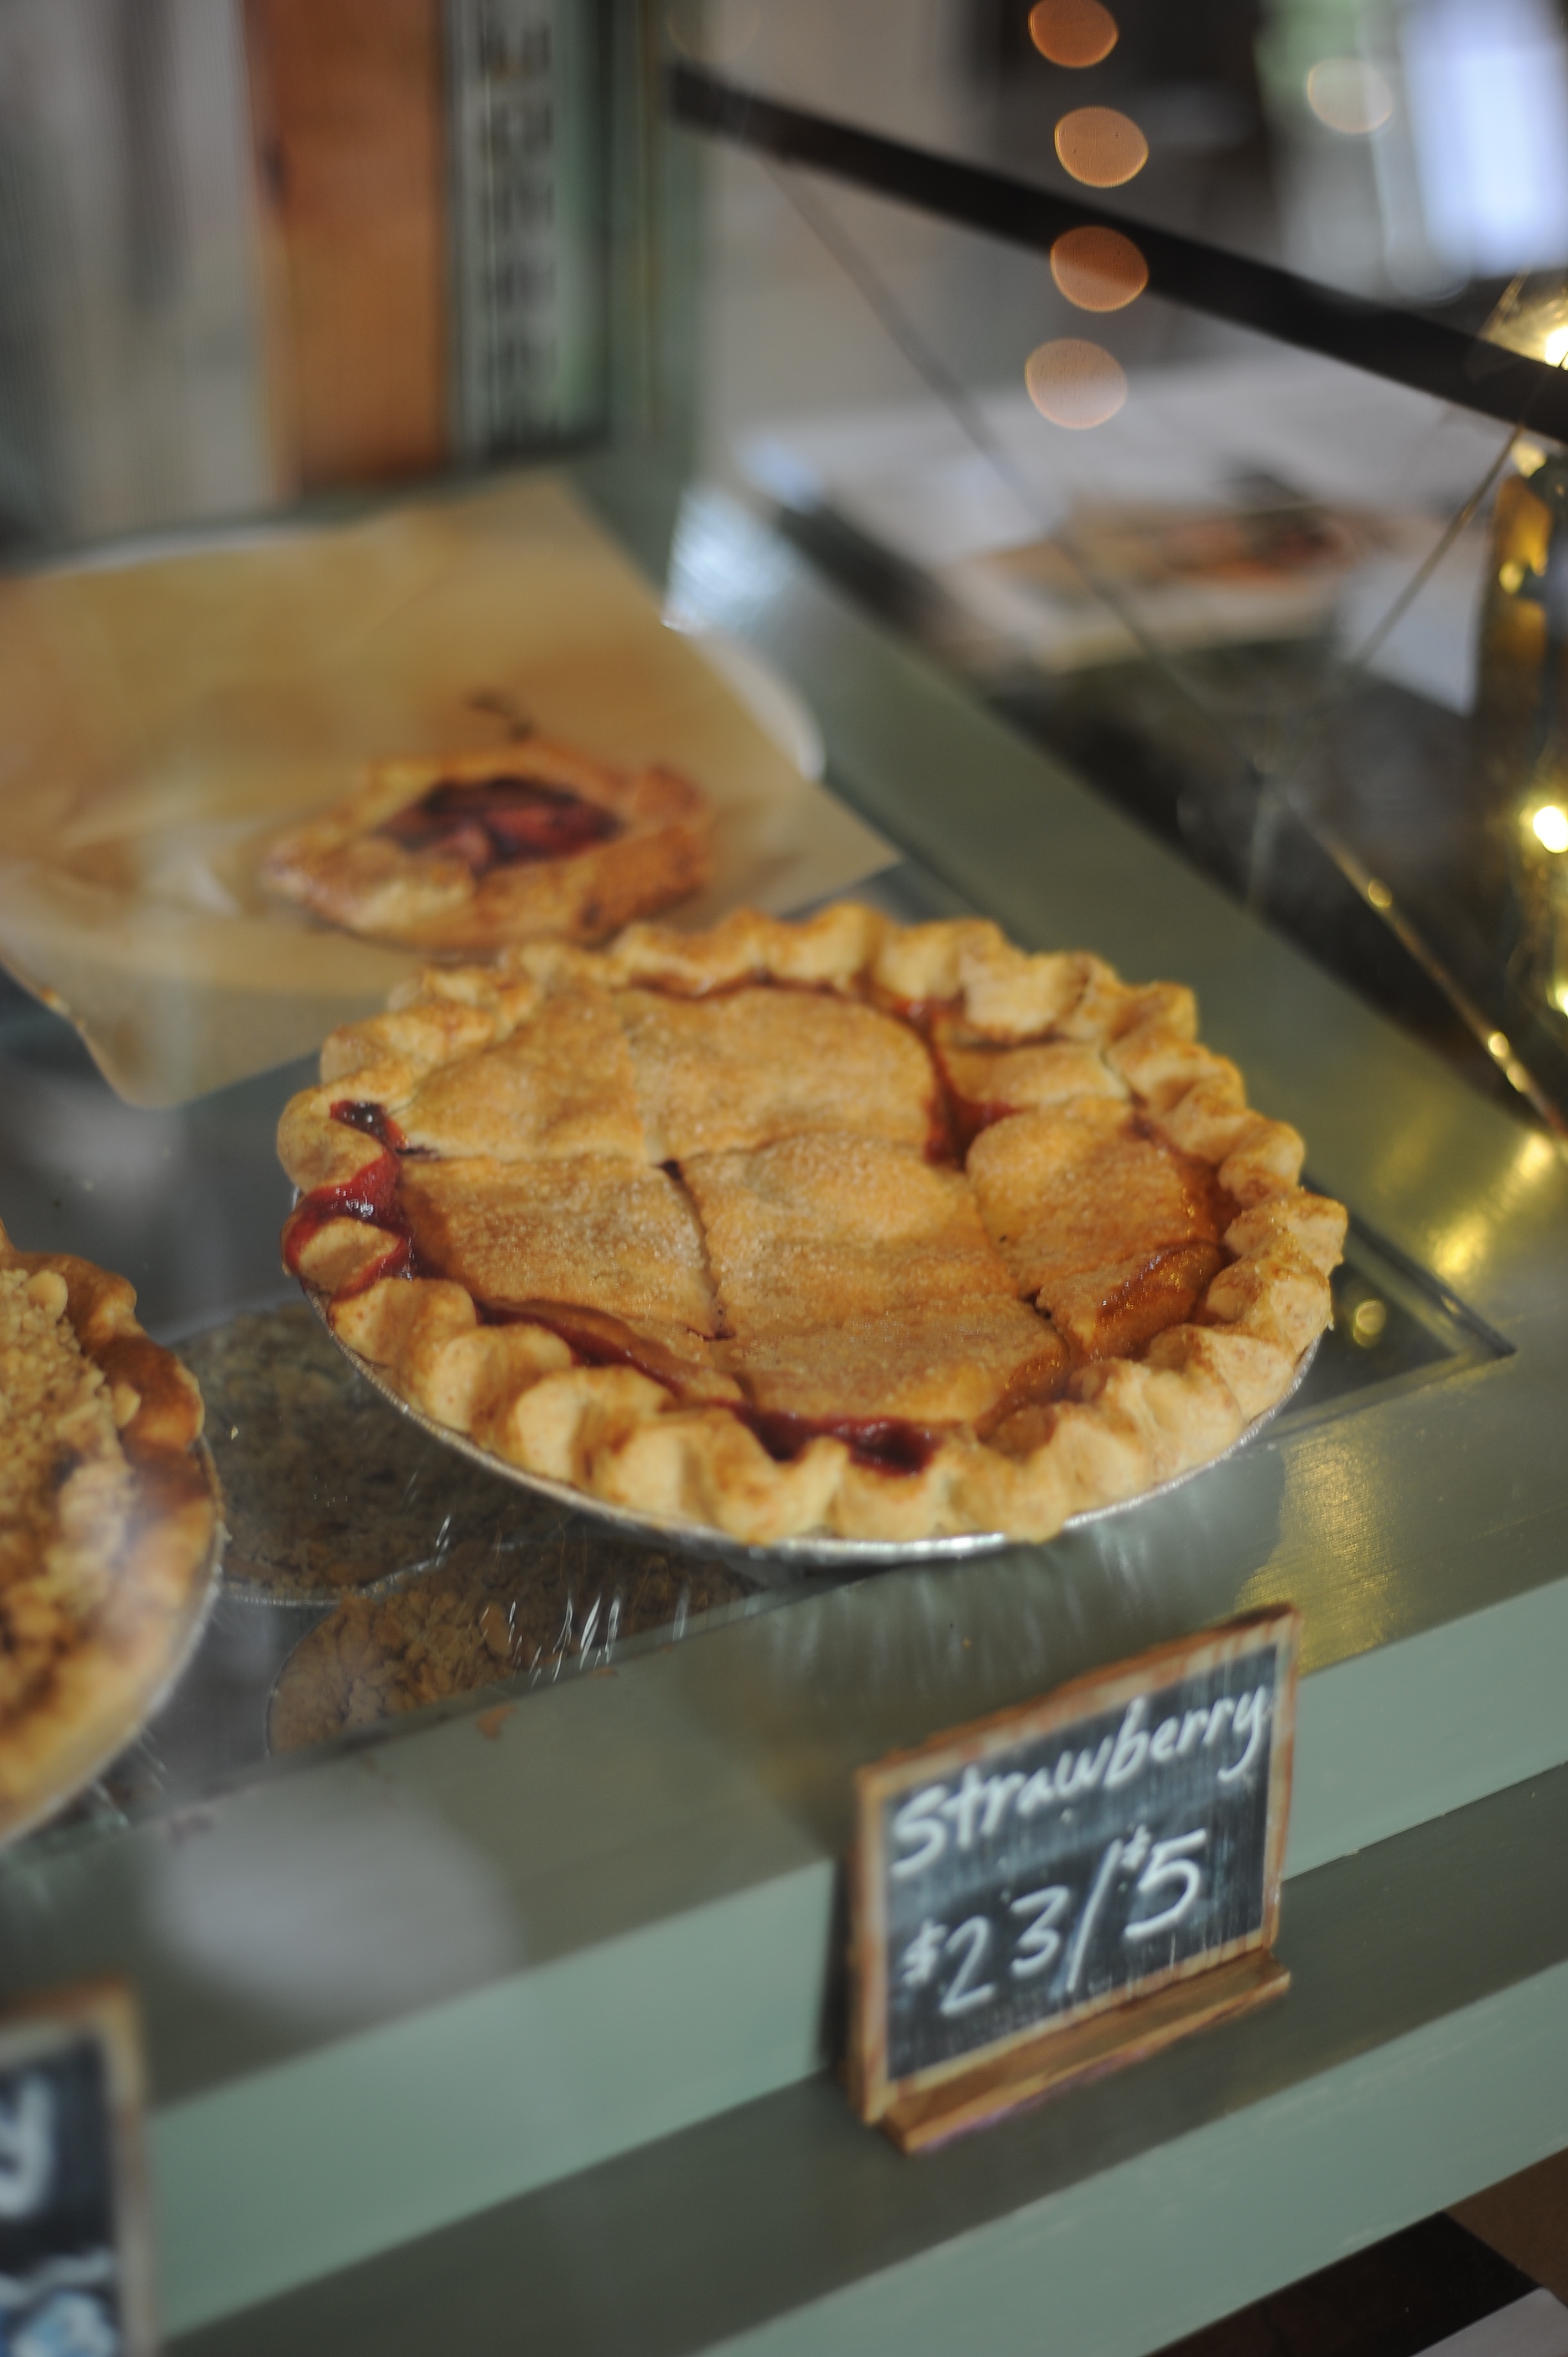 A strawberry pie made by Santa Cruz's Companion Bakeshop using Pie Ranch ingredients